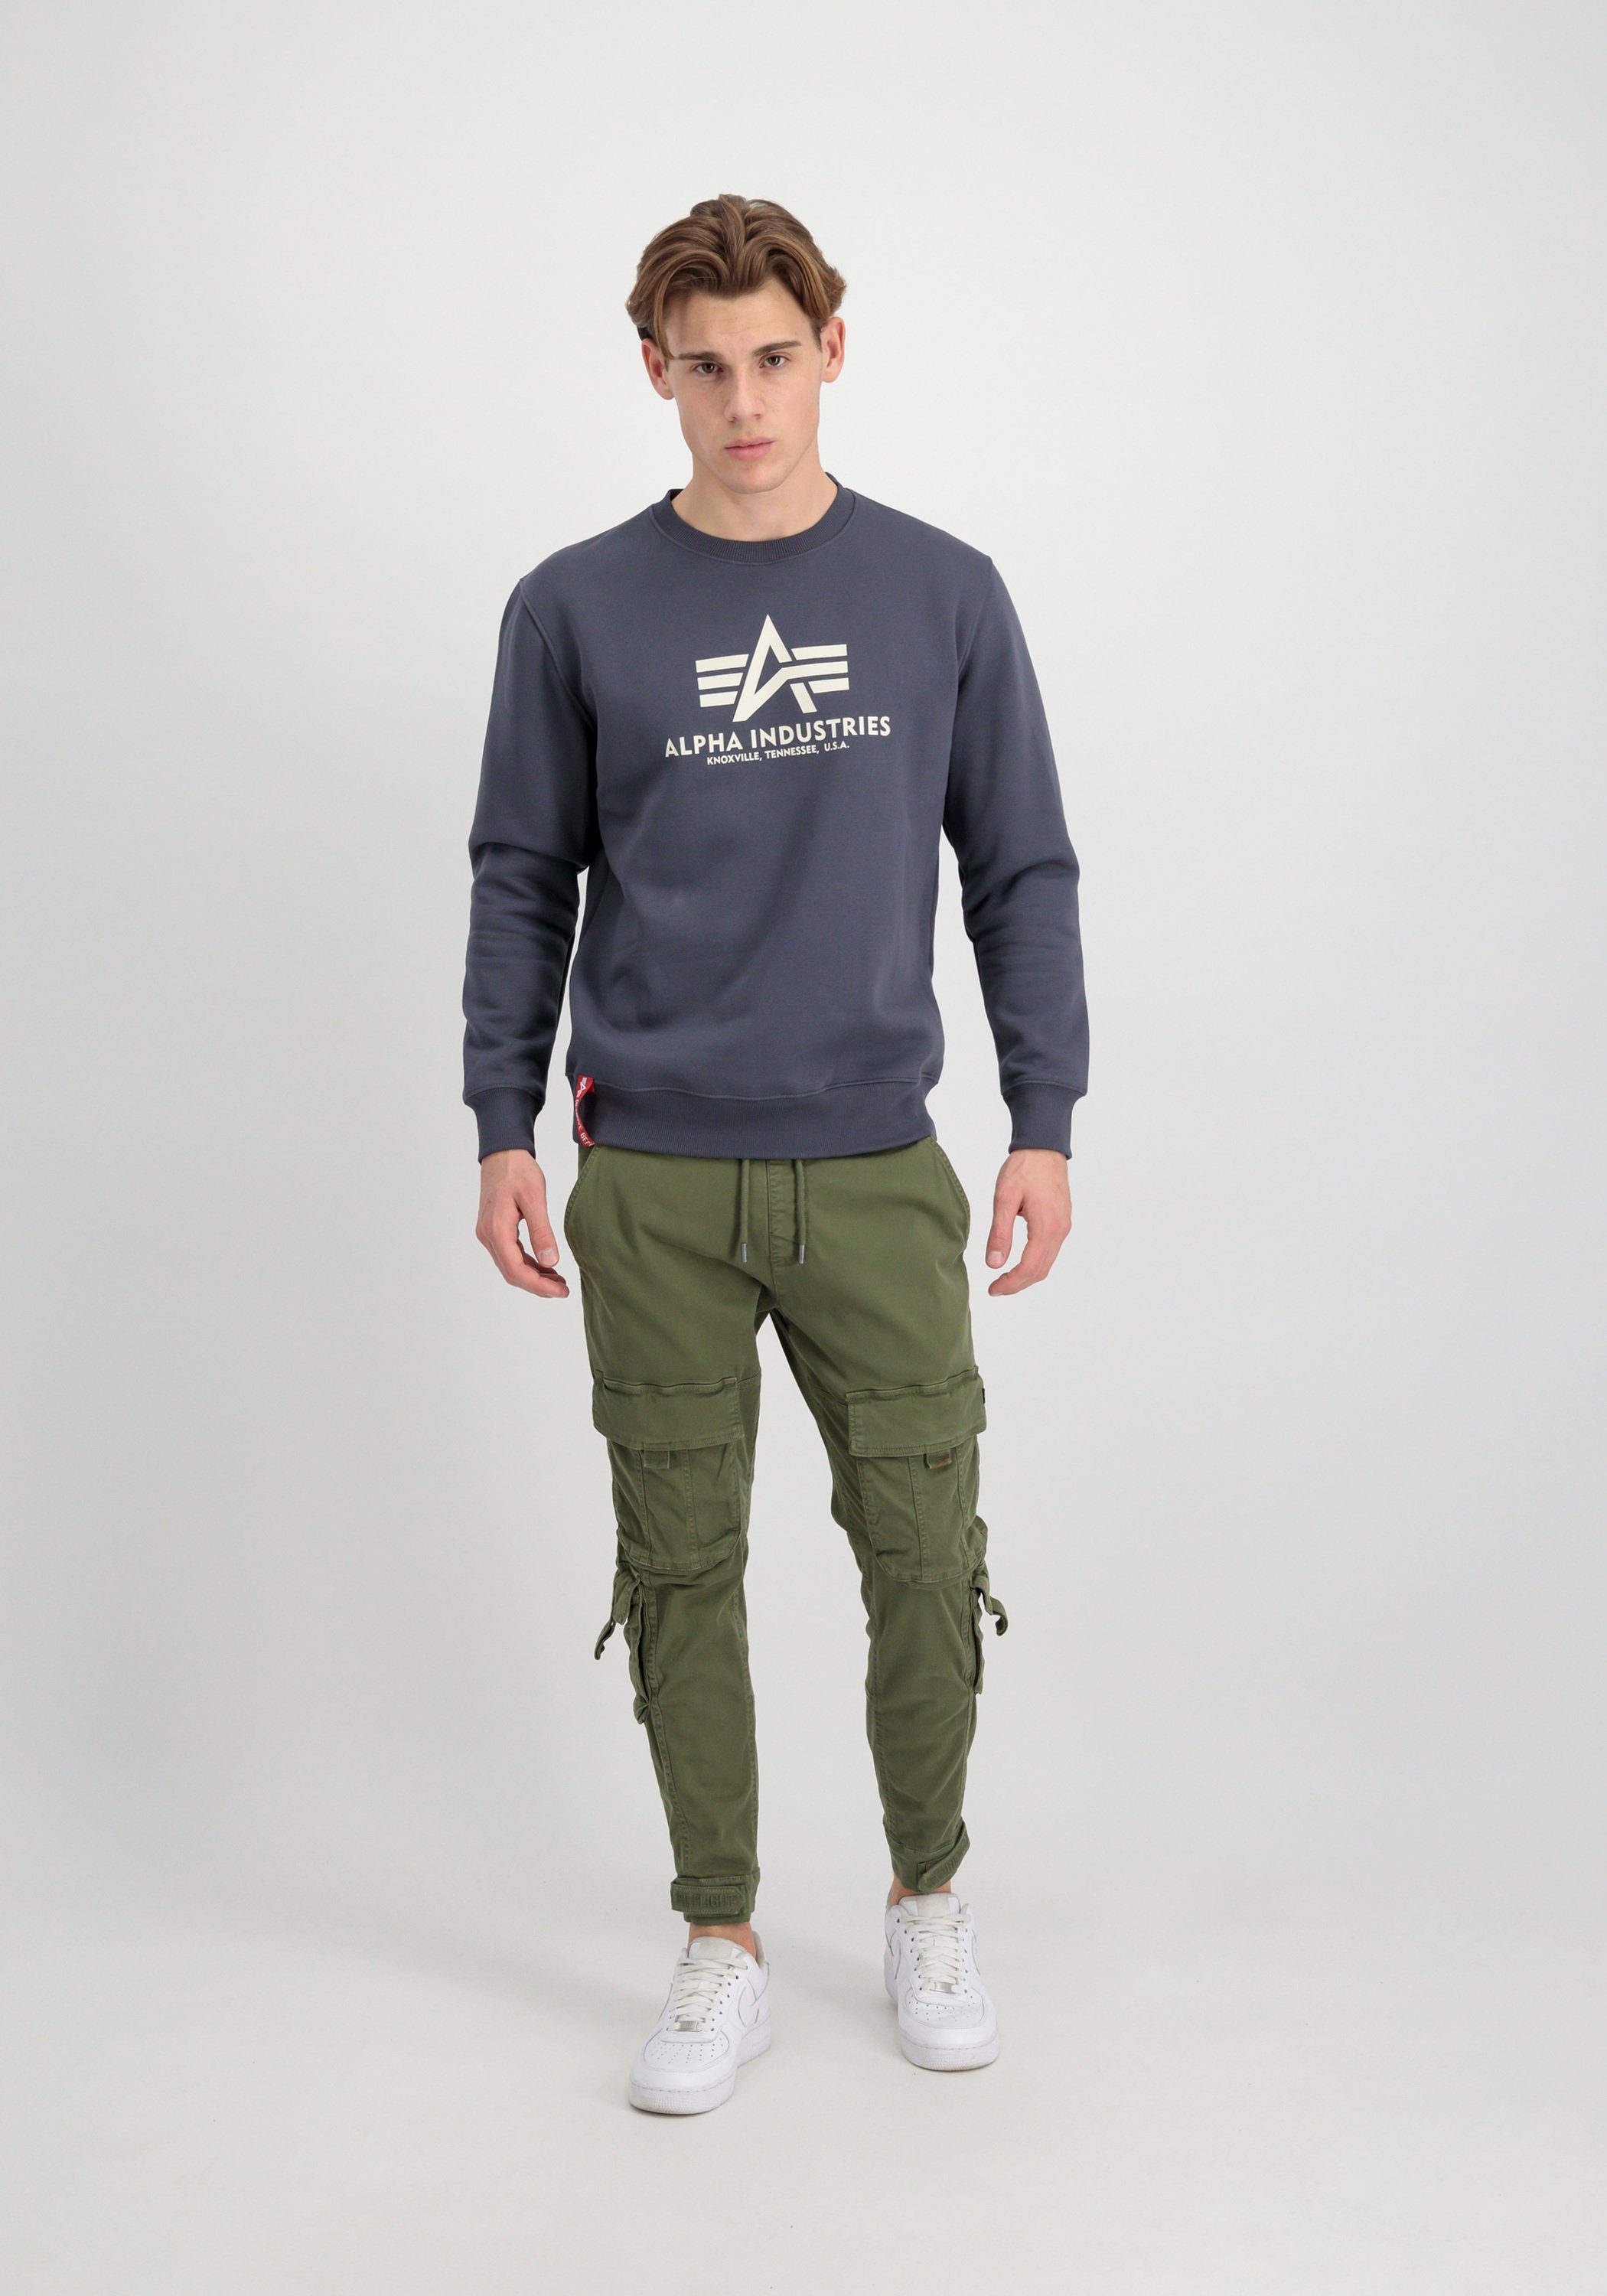 Alpha greyblack Men Sweater - Basic Sweatshirts Alpha Sweater Industries Industries